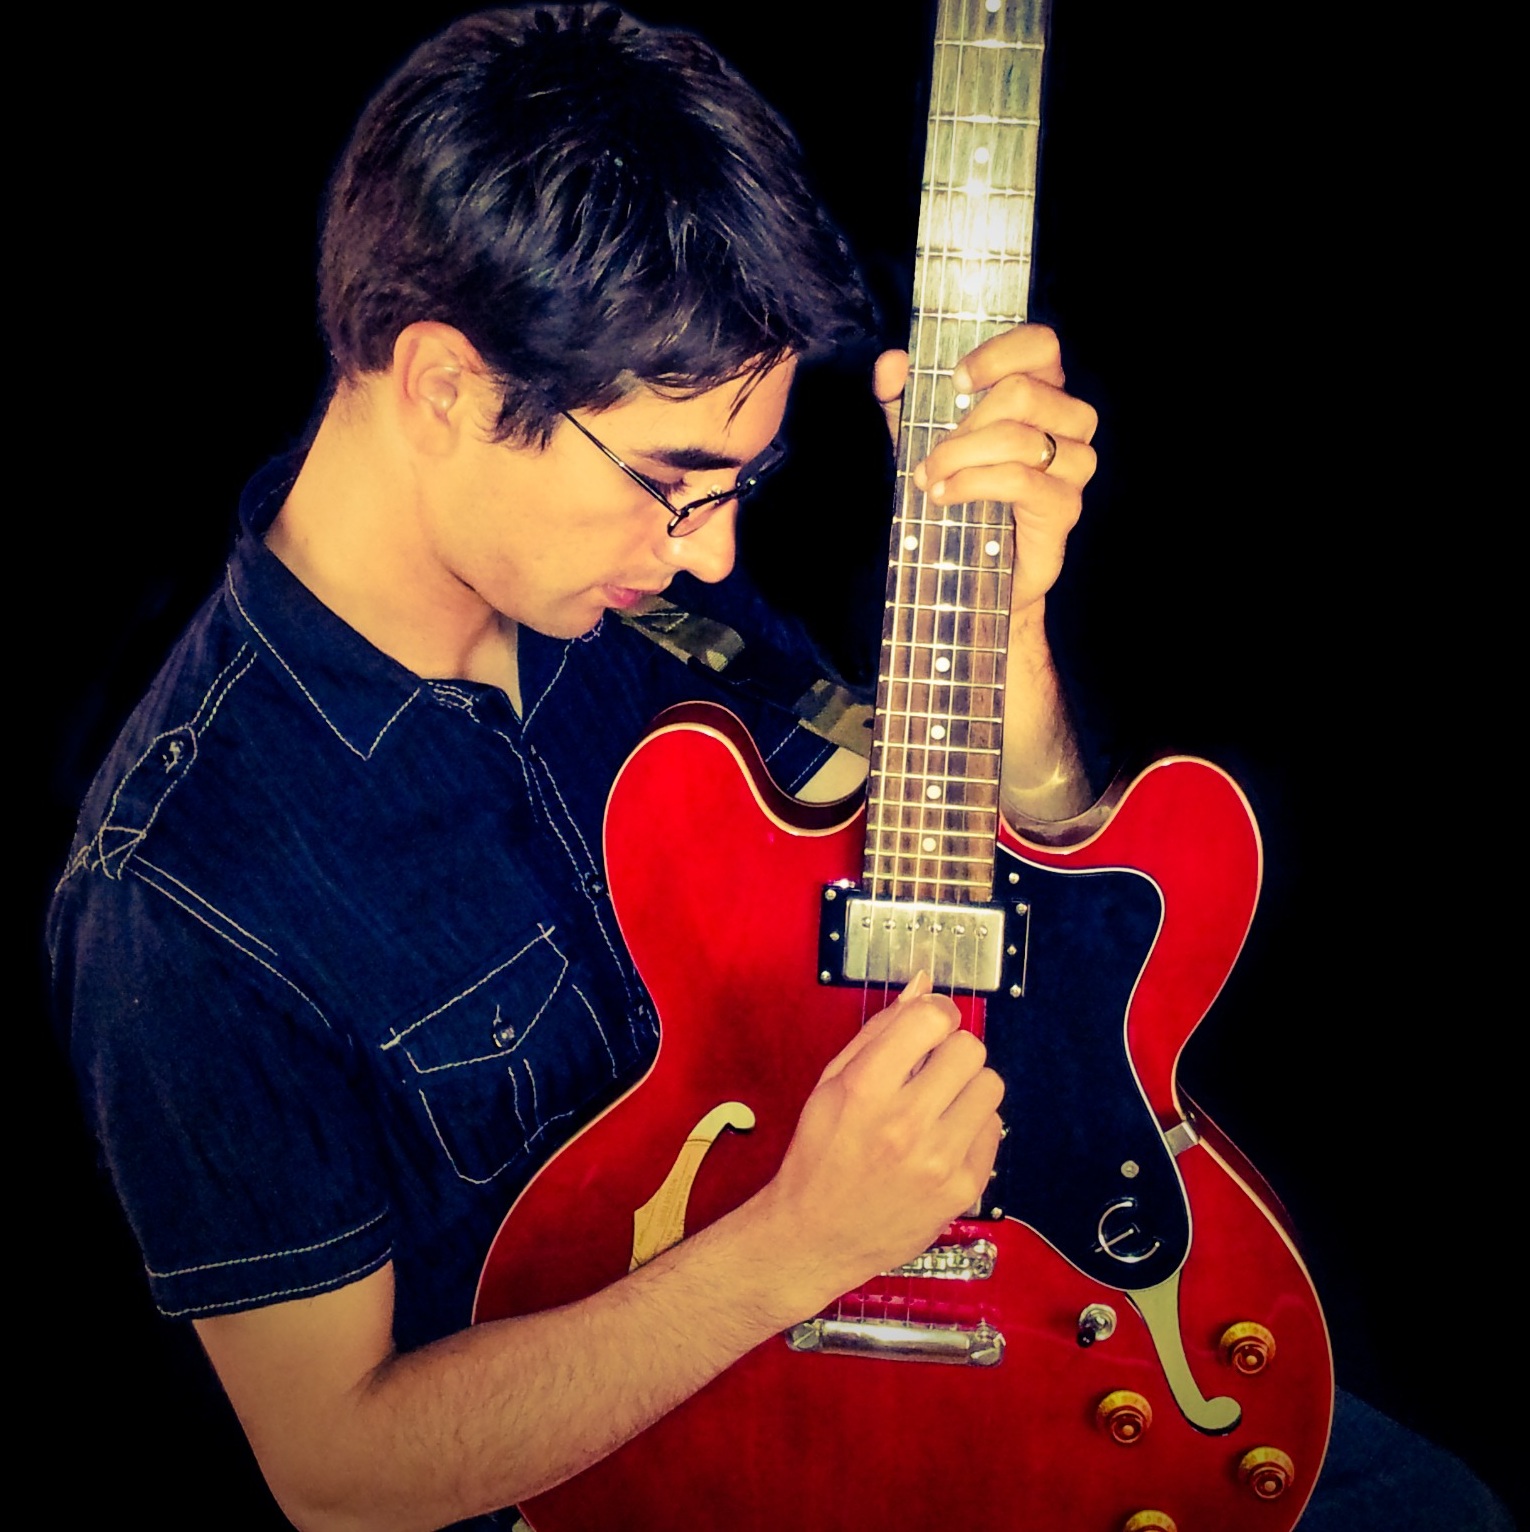 Enrique Rojas playing guitar